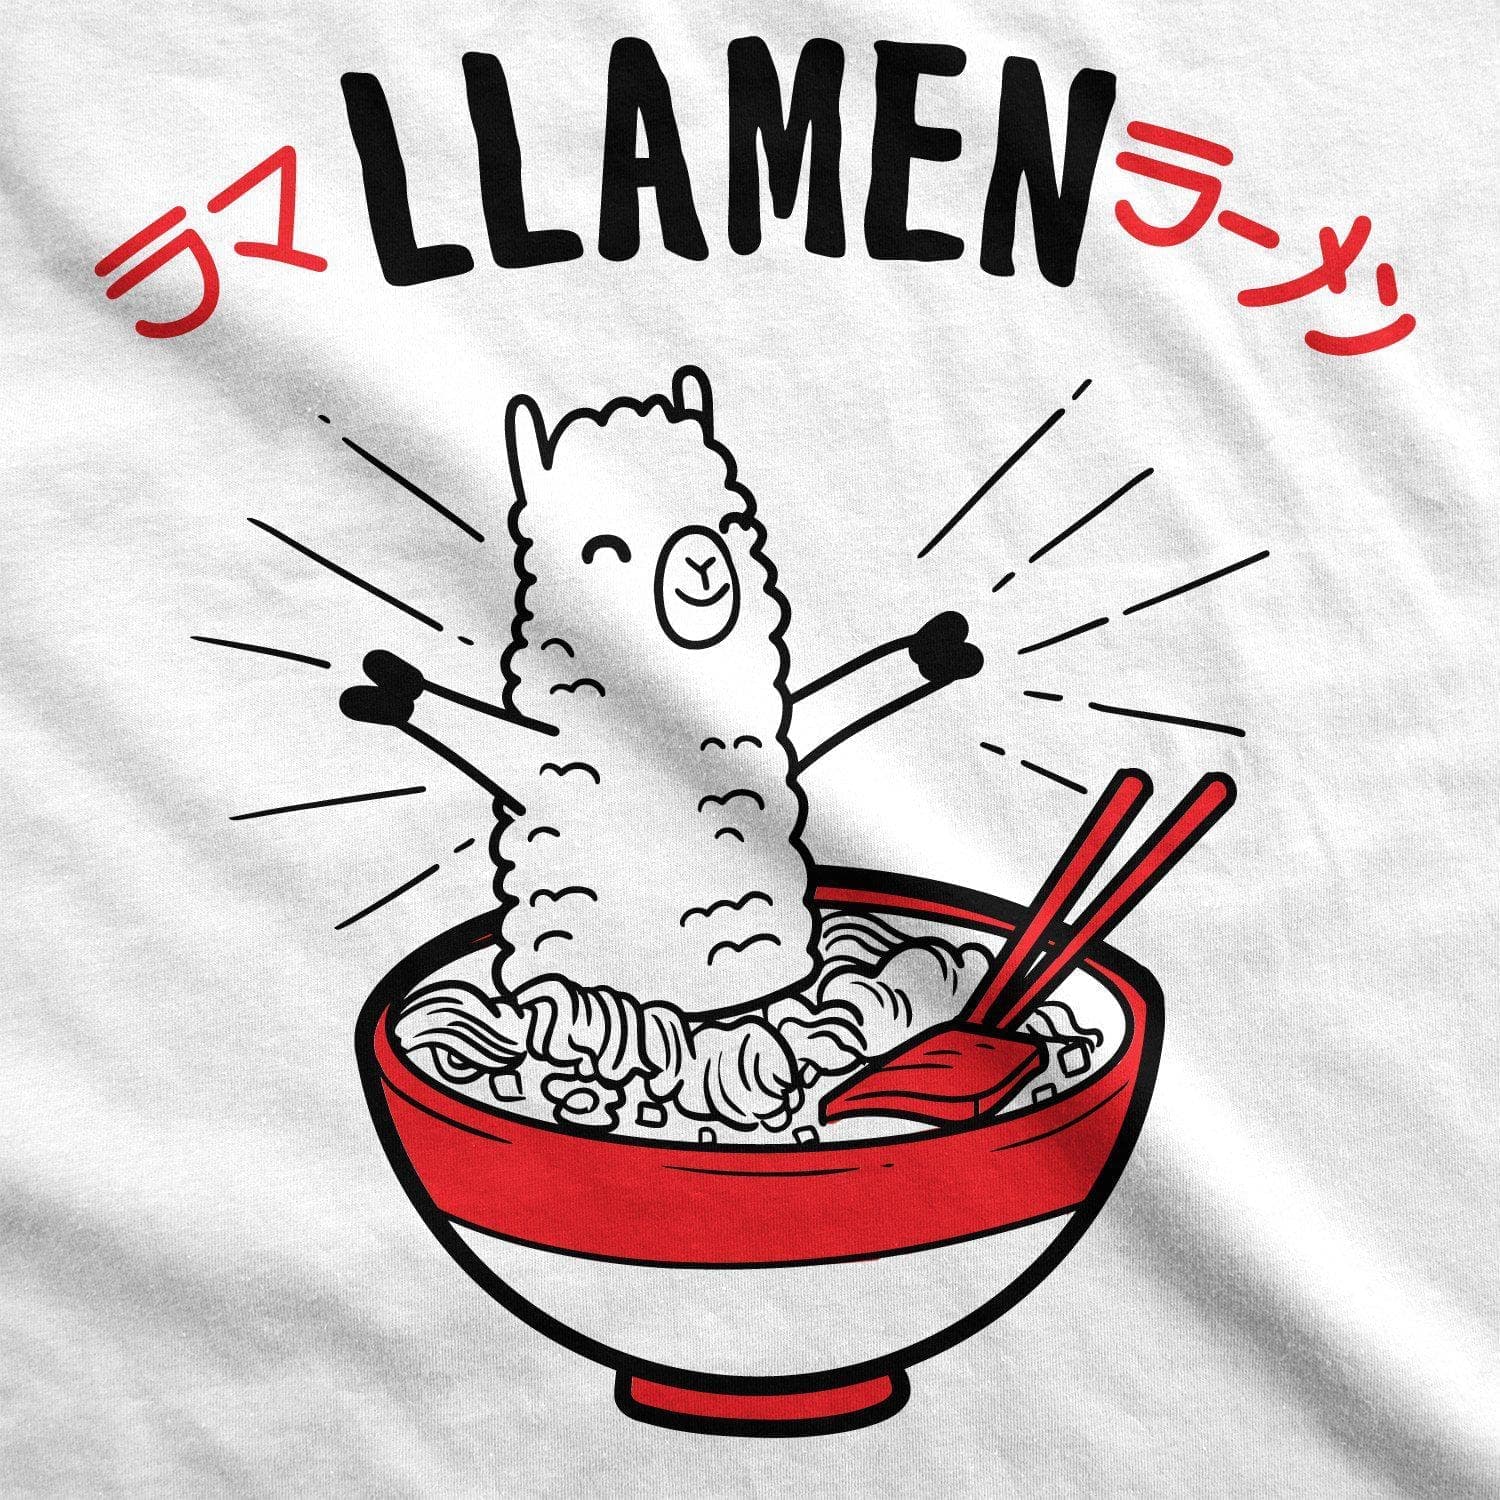 Llamen Women's Tshirt  -  Crazy Dog T-Shirts